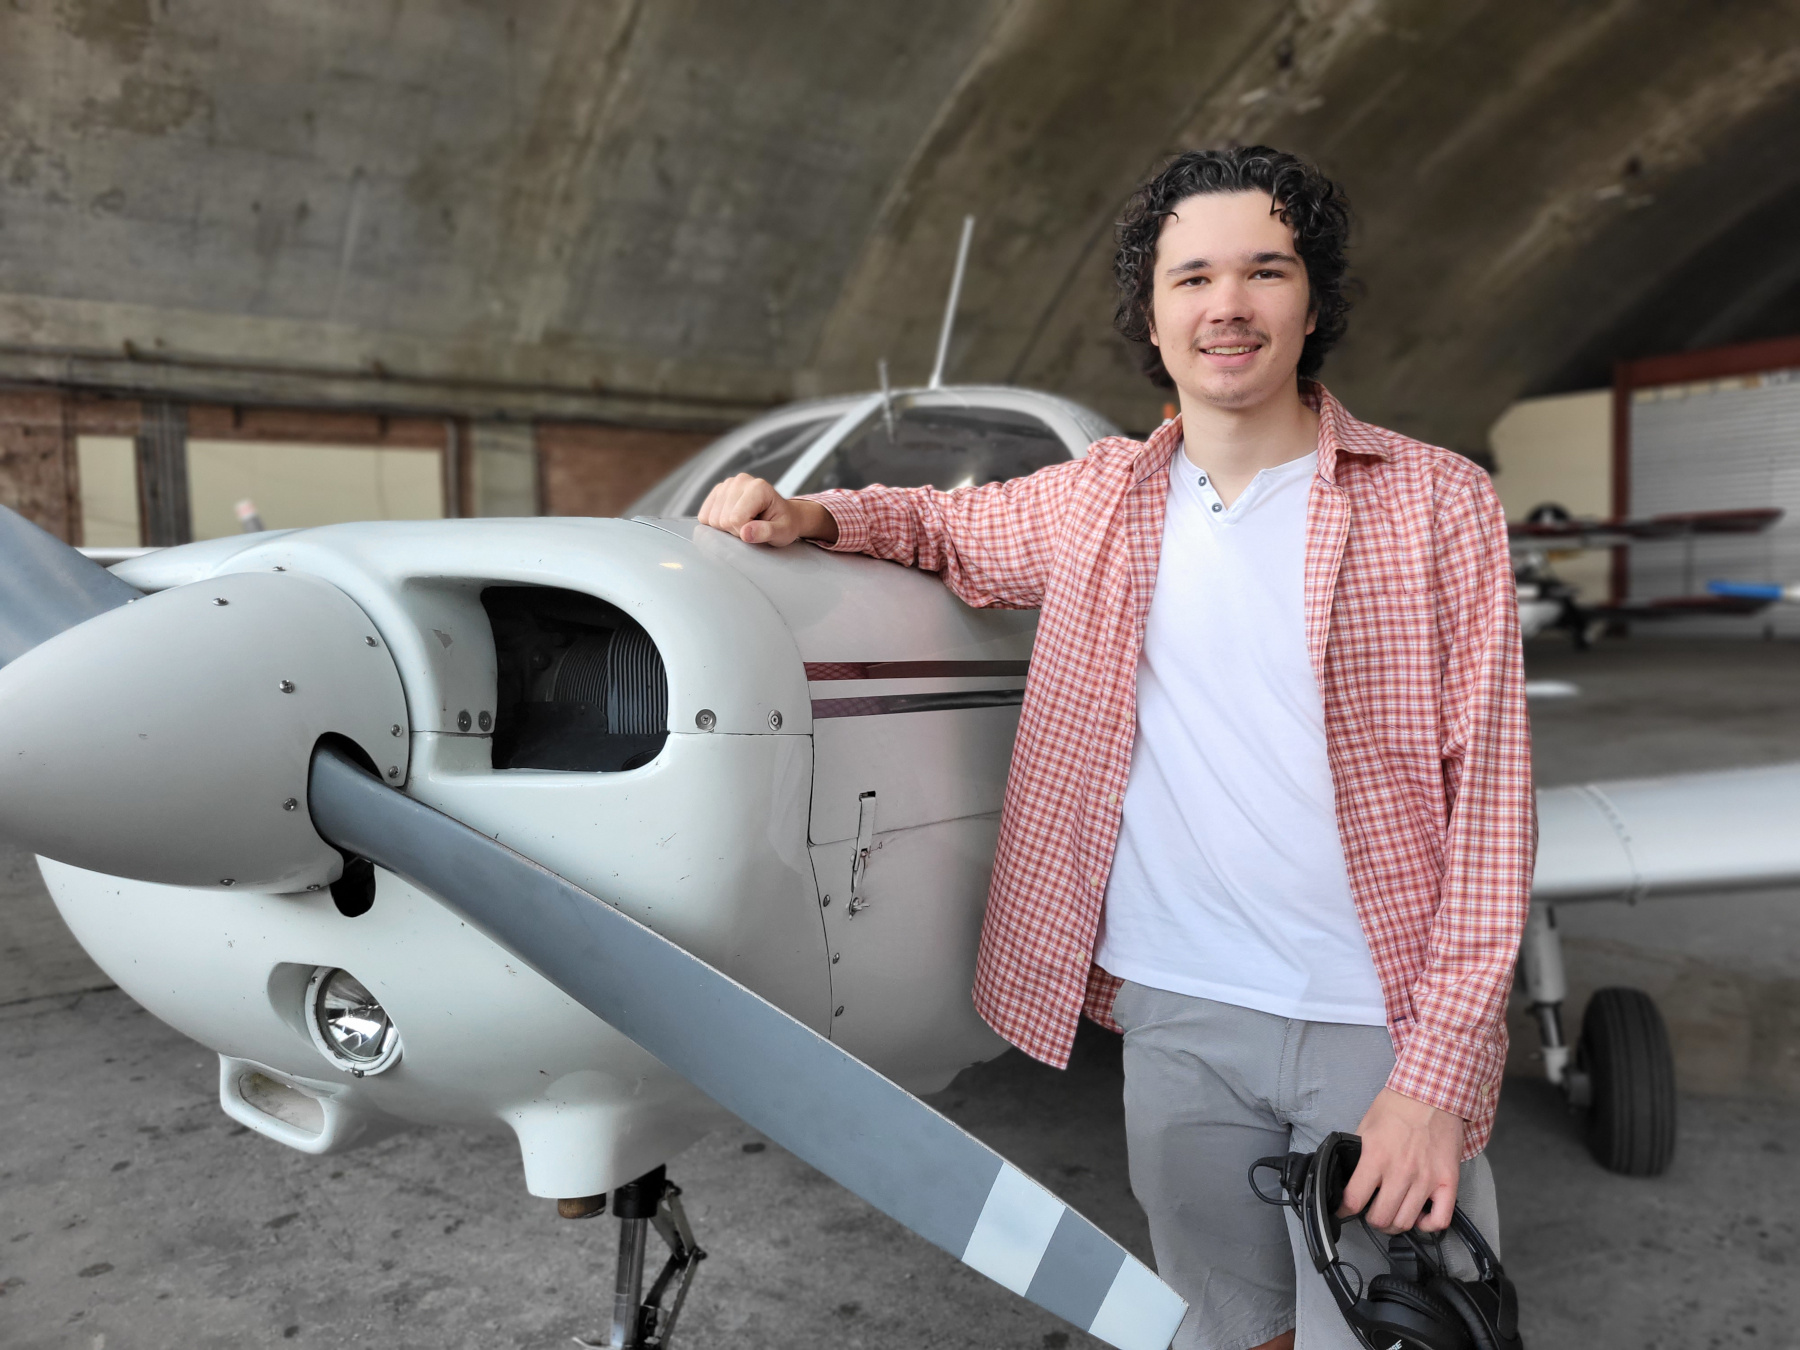 Jonathan Ryan standing next to airplane, smiling